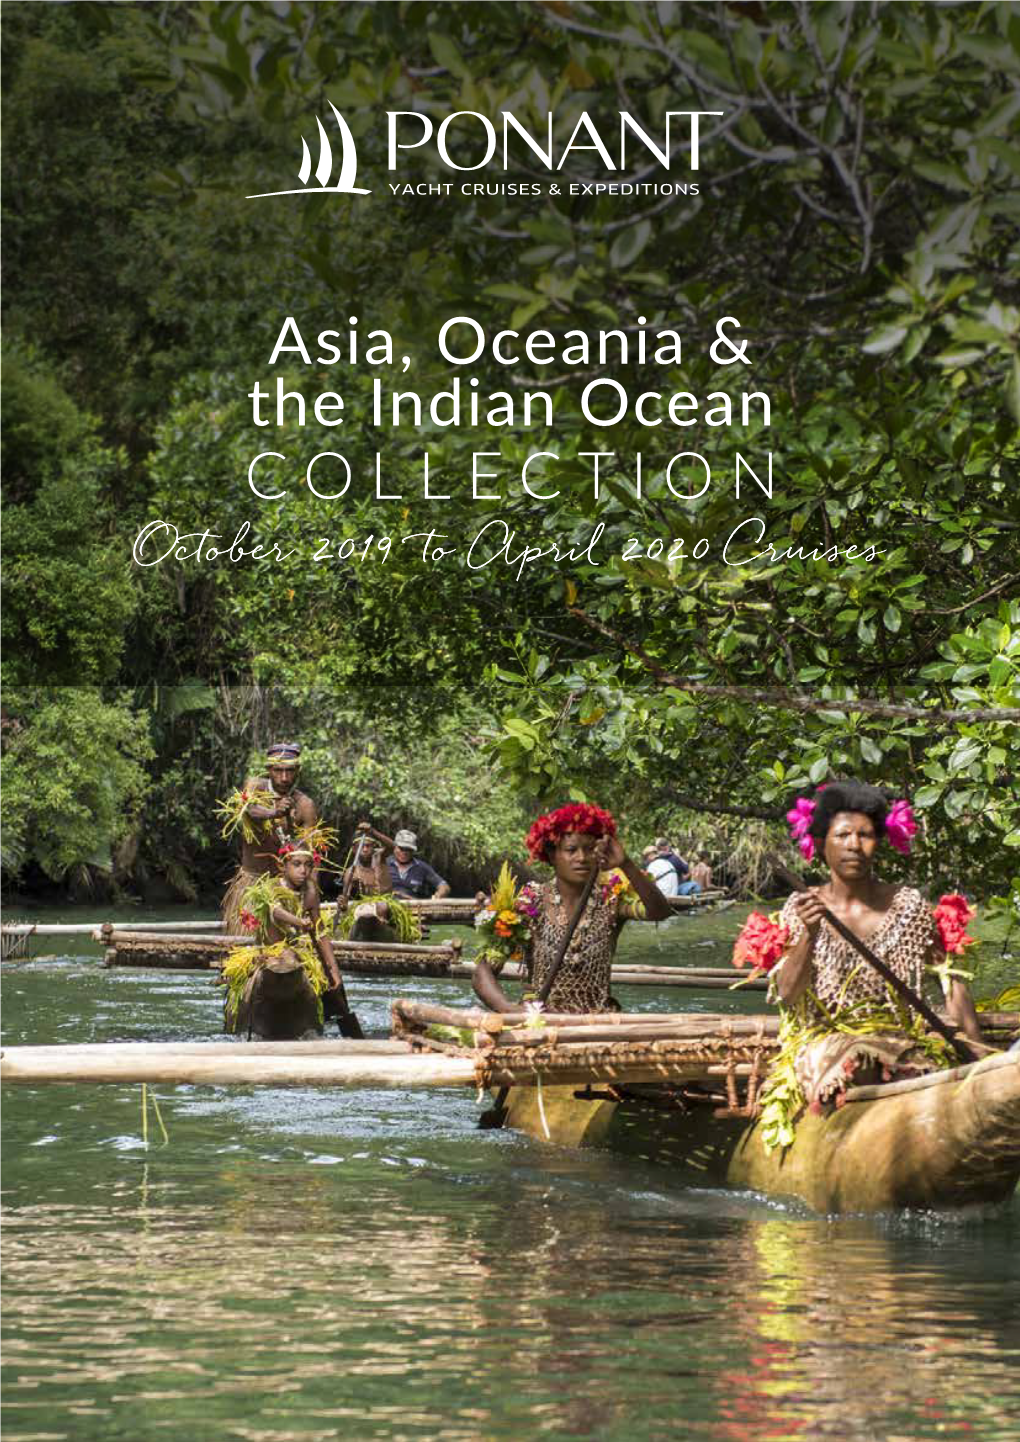 Asia, Oceania & the Indian Ocean COLLECTION